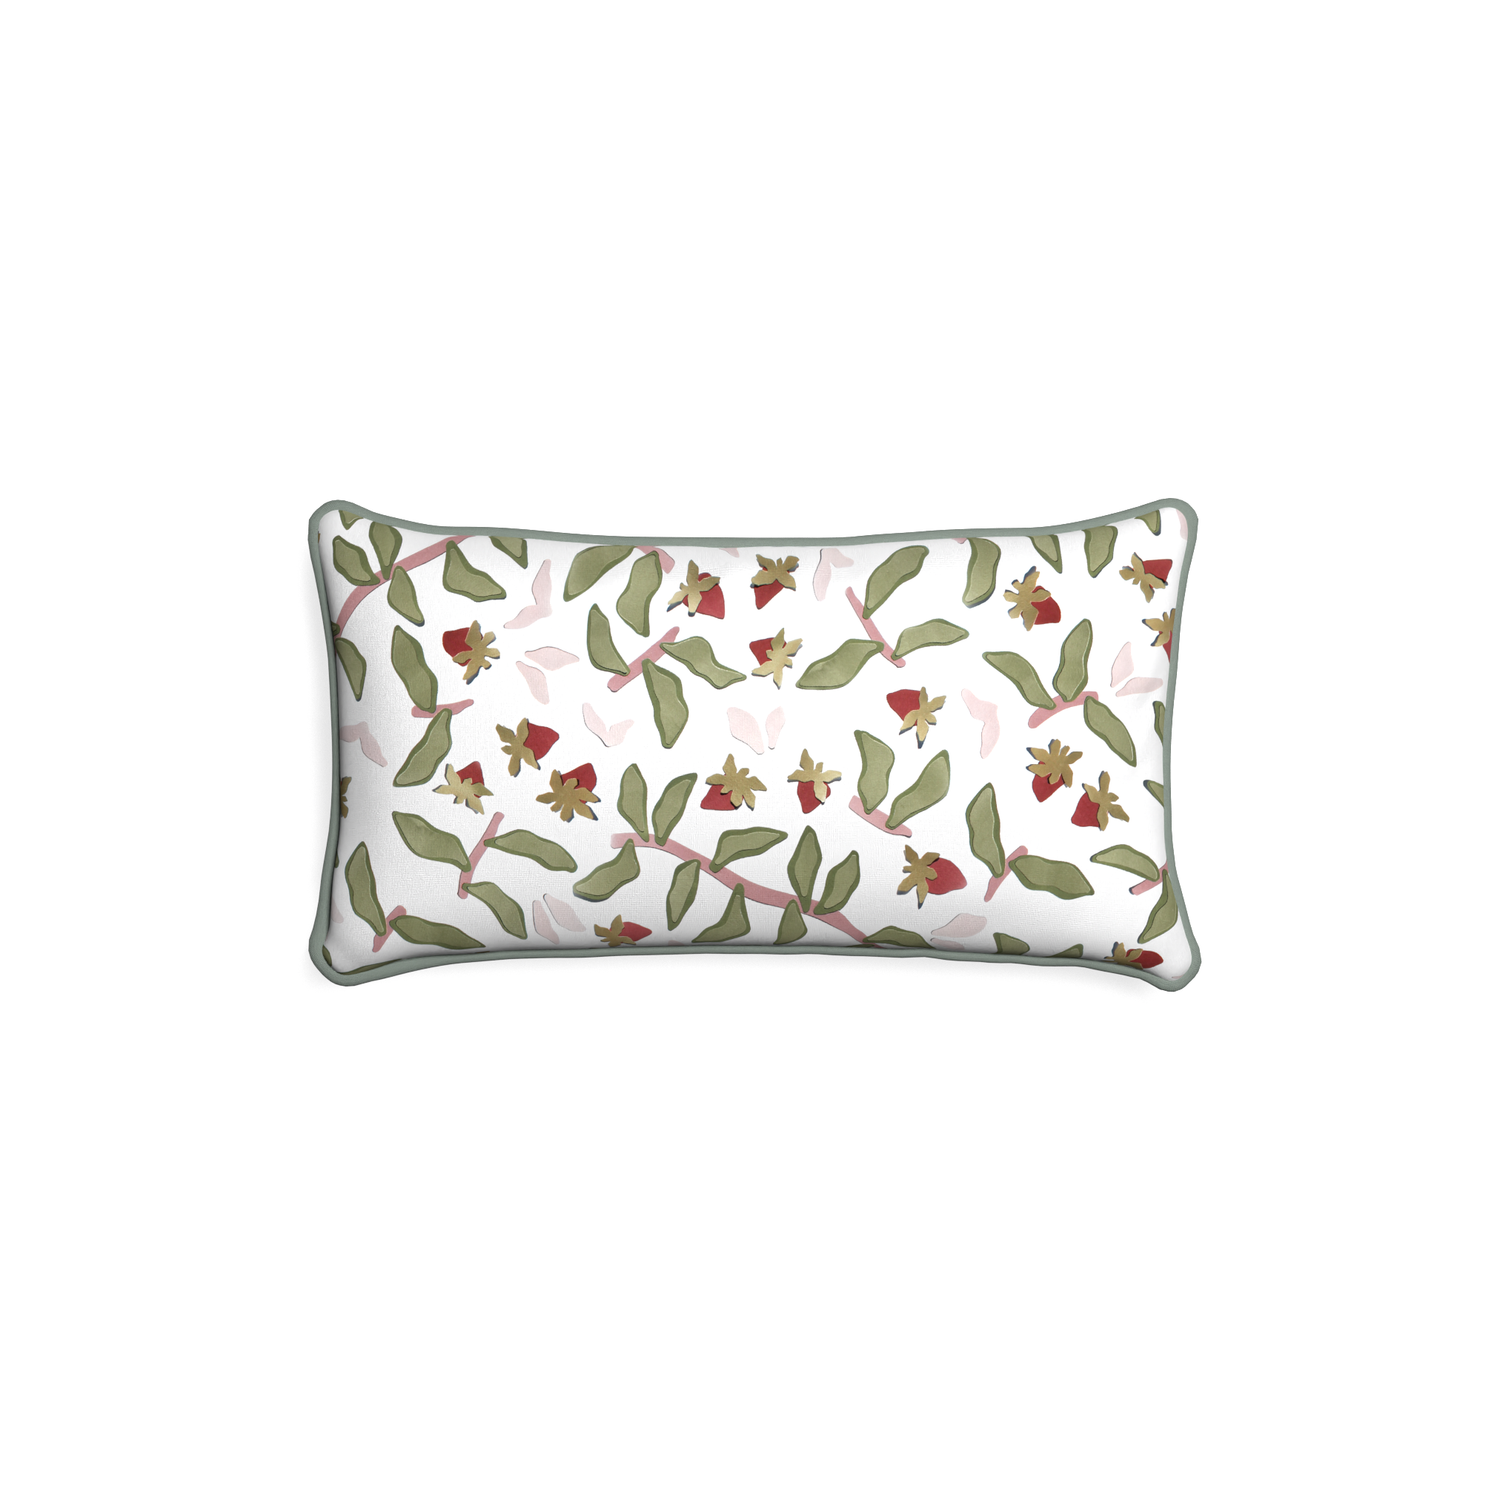 Petite-lumbar nellie custom strawberry & botanicalpillow with sage piping on white background